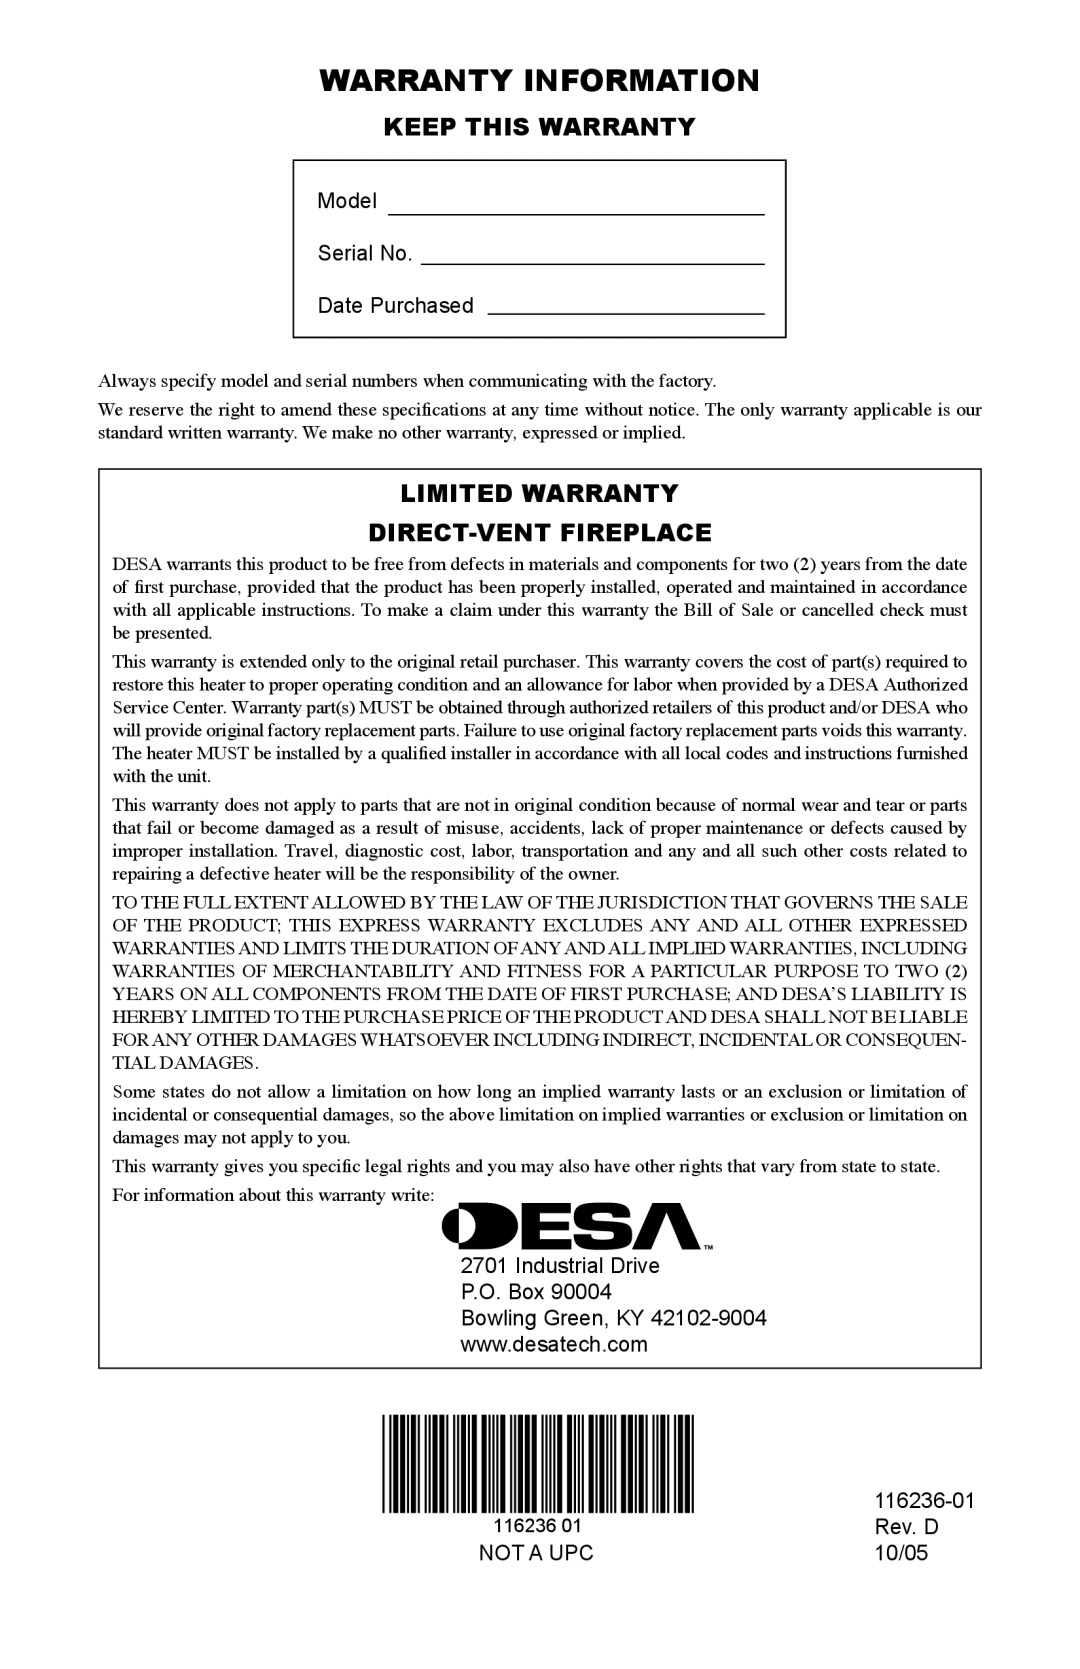 Desa (V)VC42P, CGCDV42PR Warranty Information, Keep This Warranty, Limited Warranty Direct-Ventfireplace 